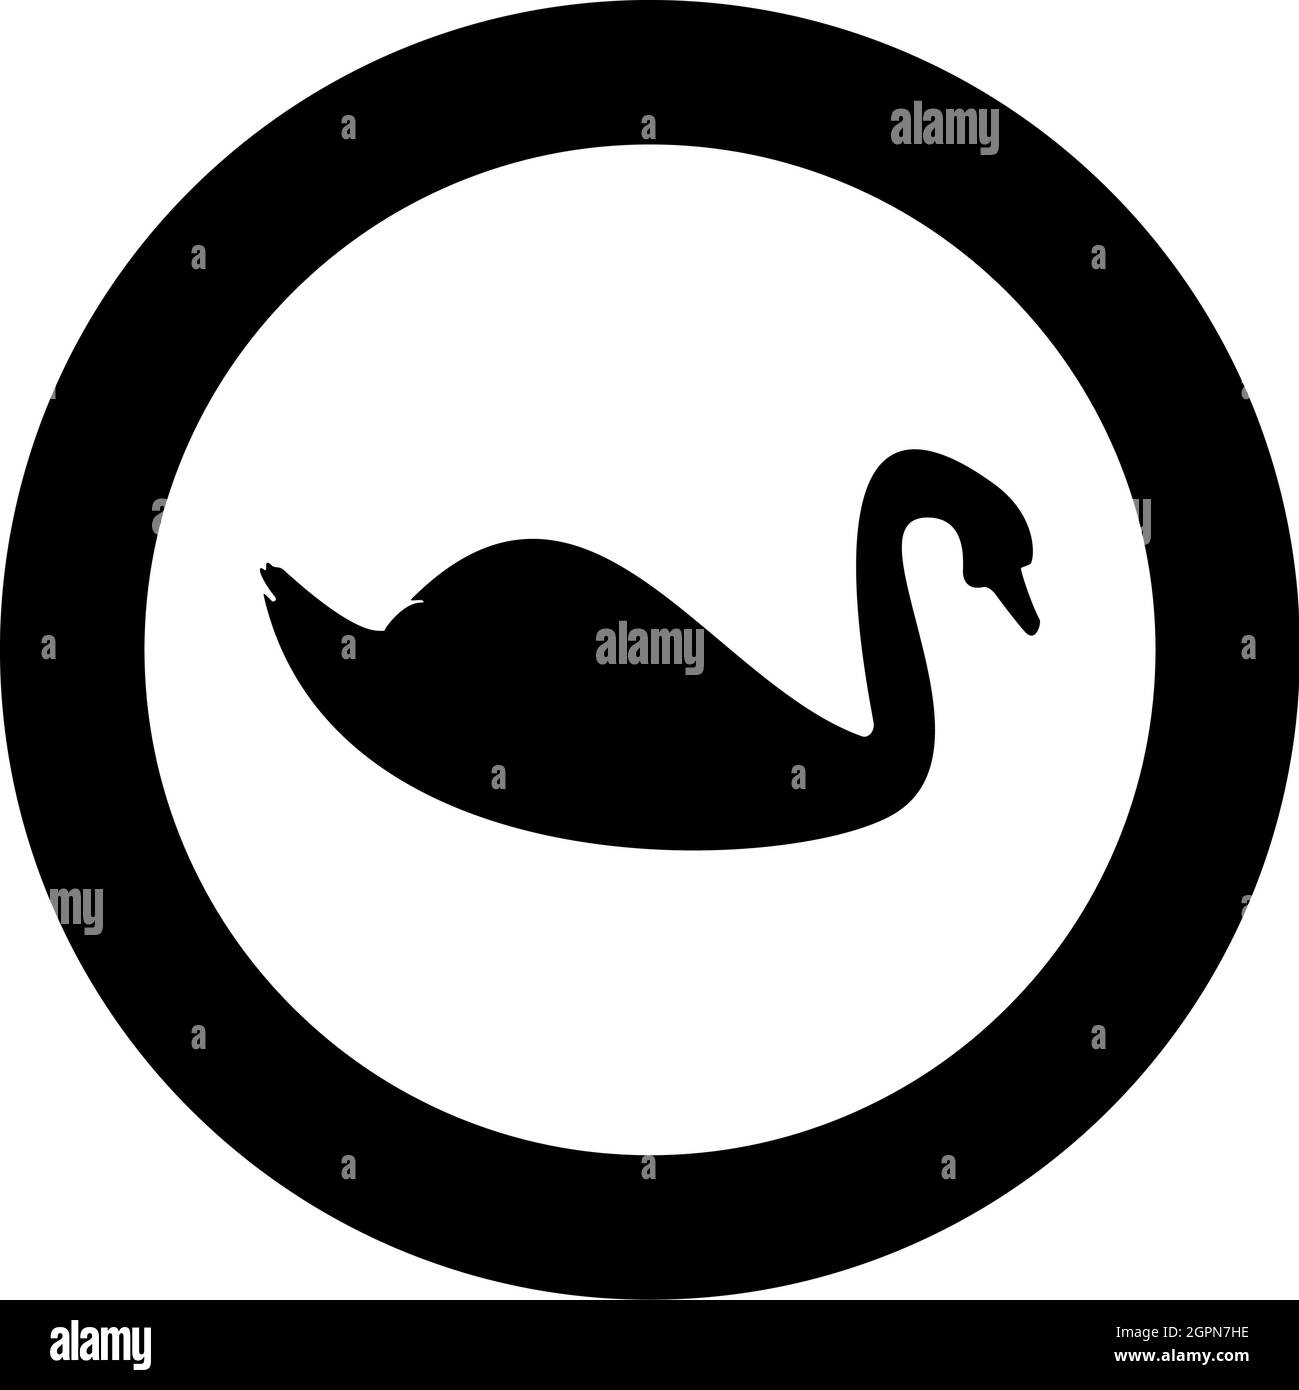 Swan Vogel Wasservögel Silhouette im Kreis rund schwarz Farbe Vektor Illustration solide Umriss Stil Bild Stock Vektor